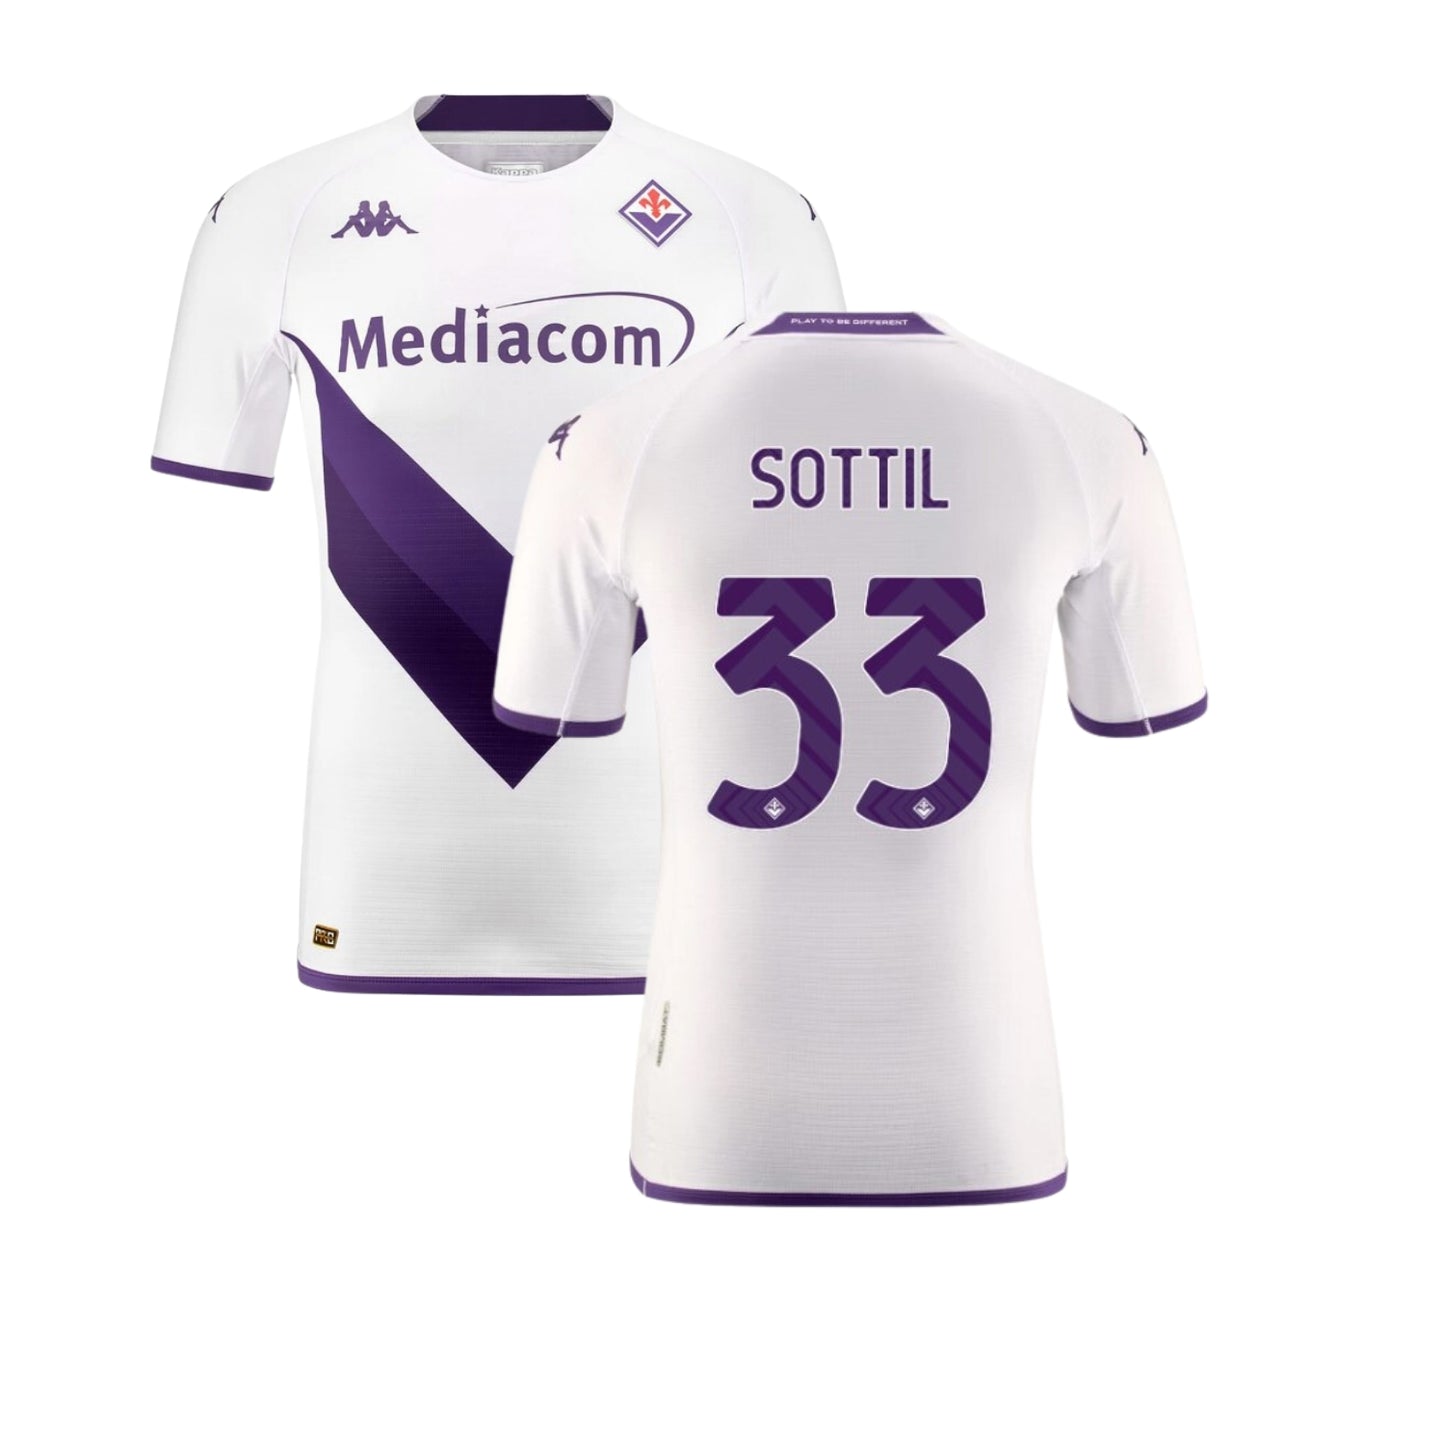 Riccardo Sottil ACF Fiorentina 33 Jersey